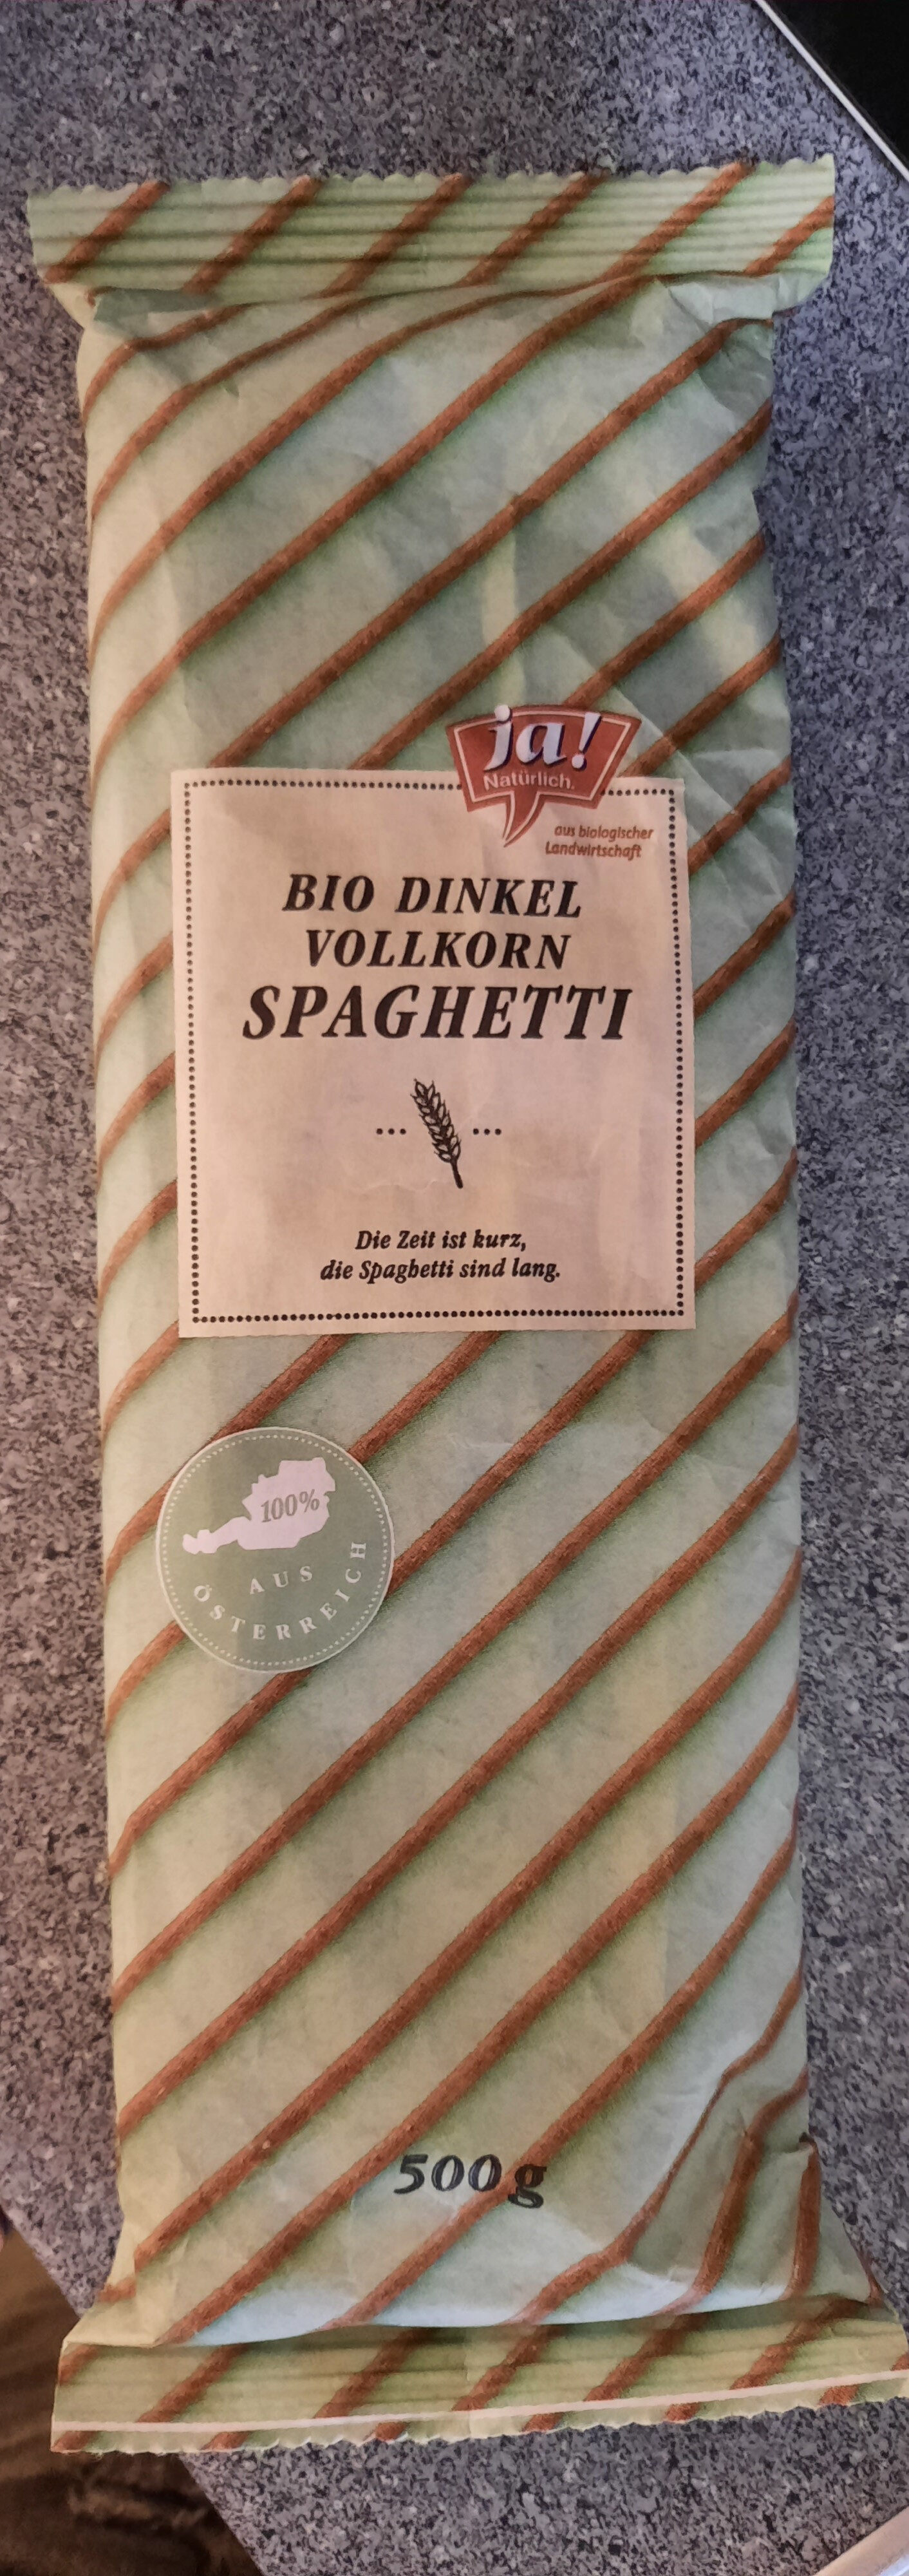 Bio Dinkel Vollkorn Spaghetti - Produkt